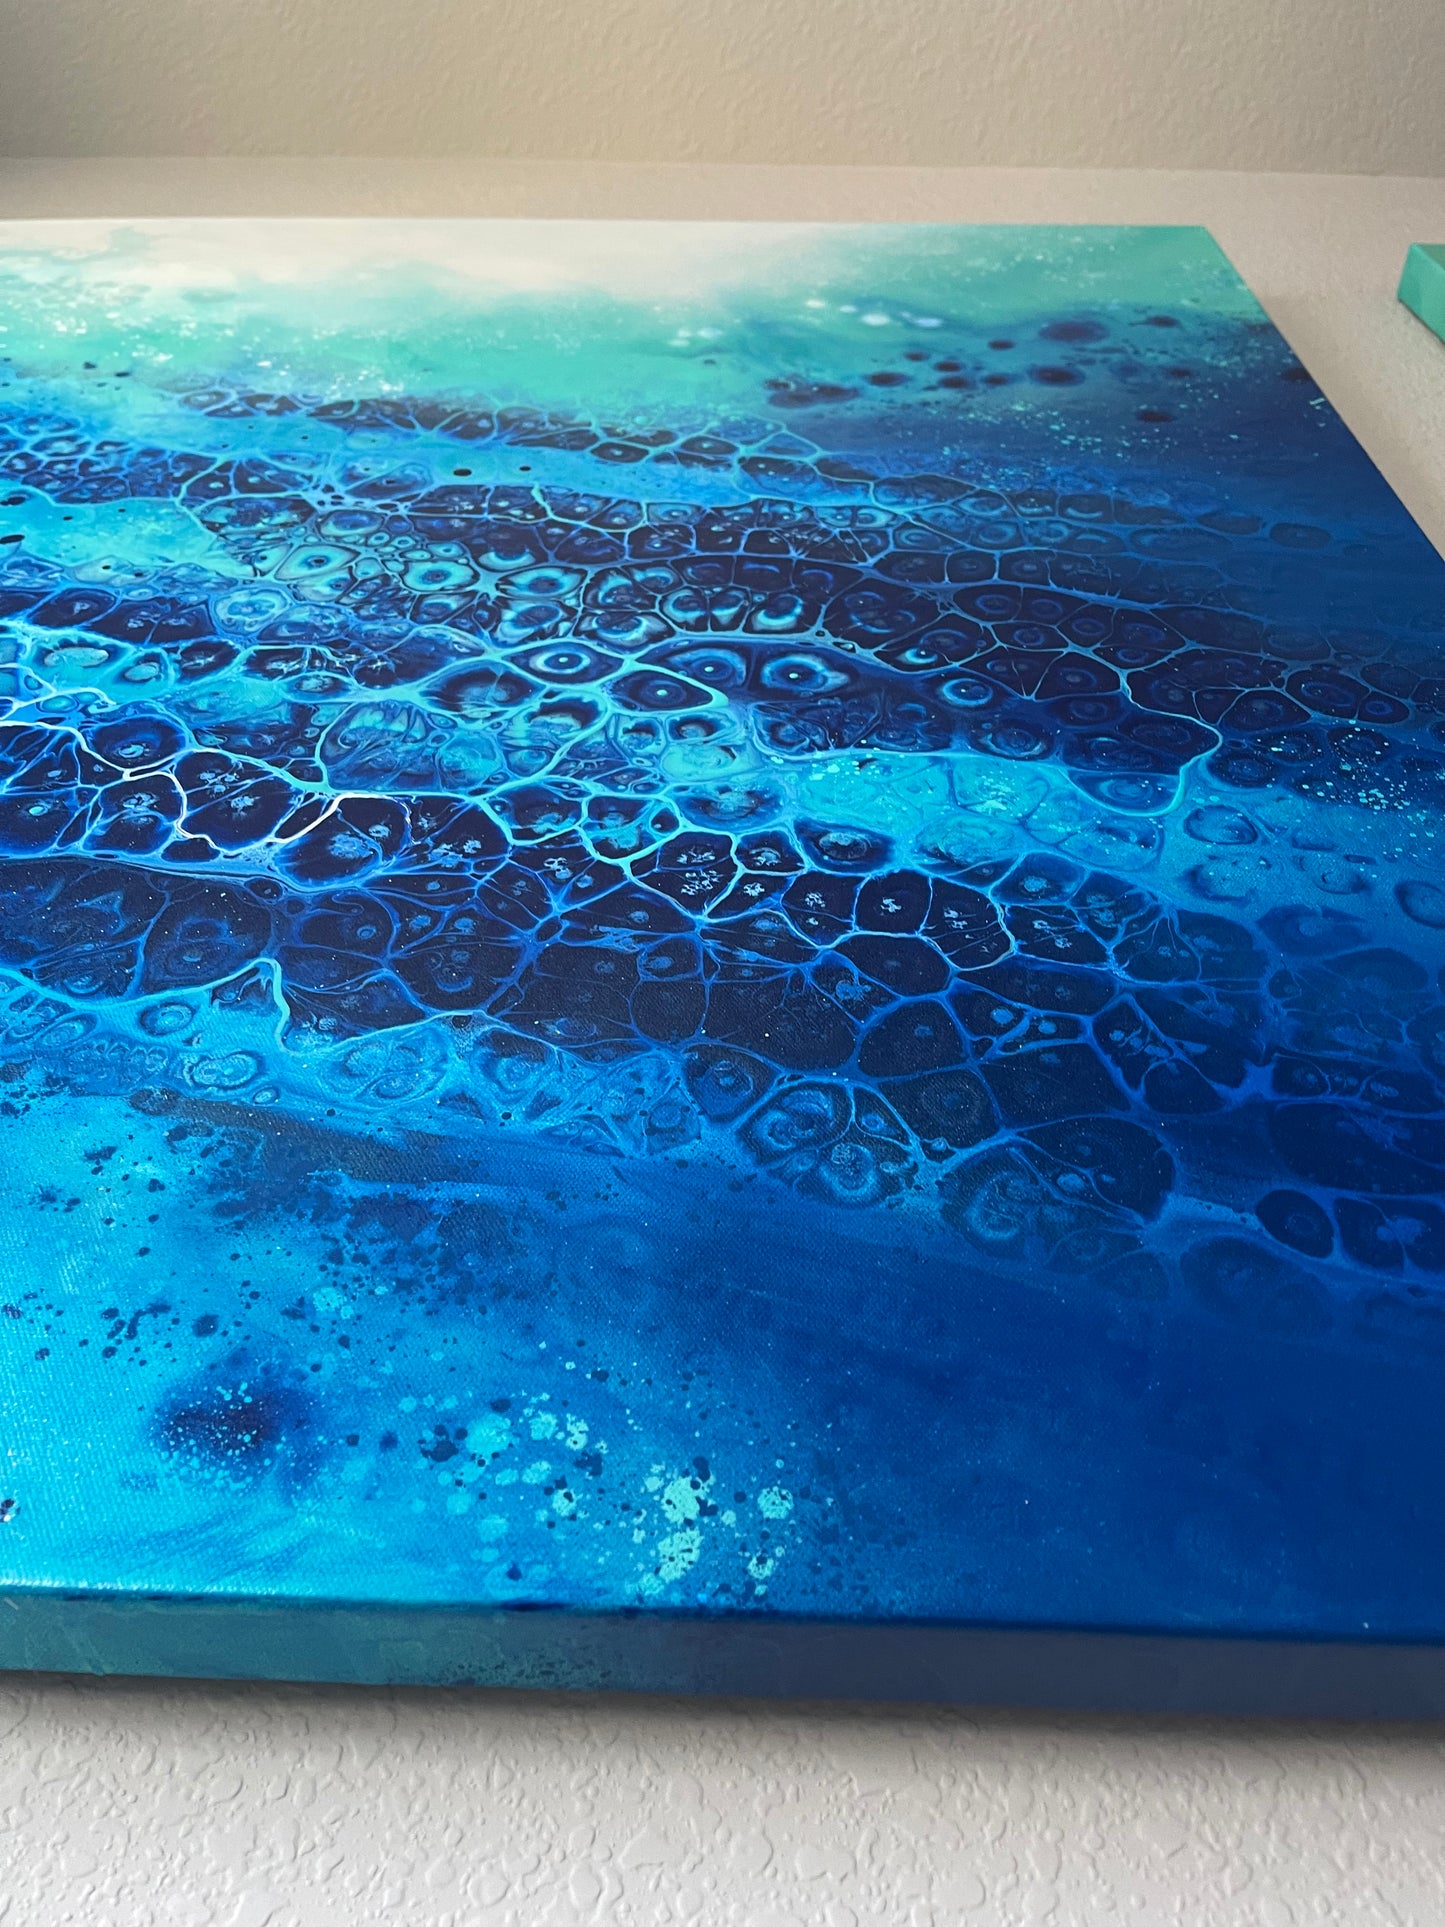 
                  
                    abstract ocean art blue fluid painting 
                  
                